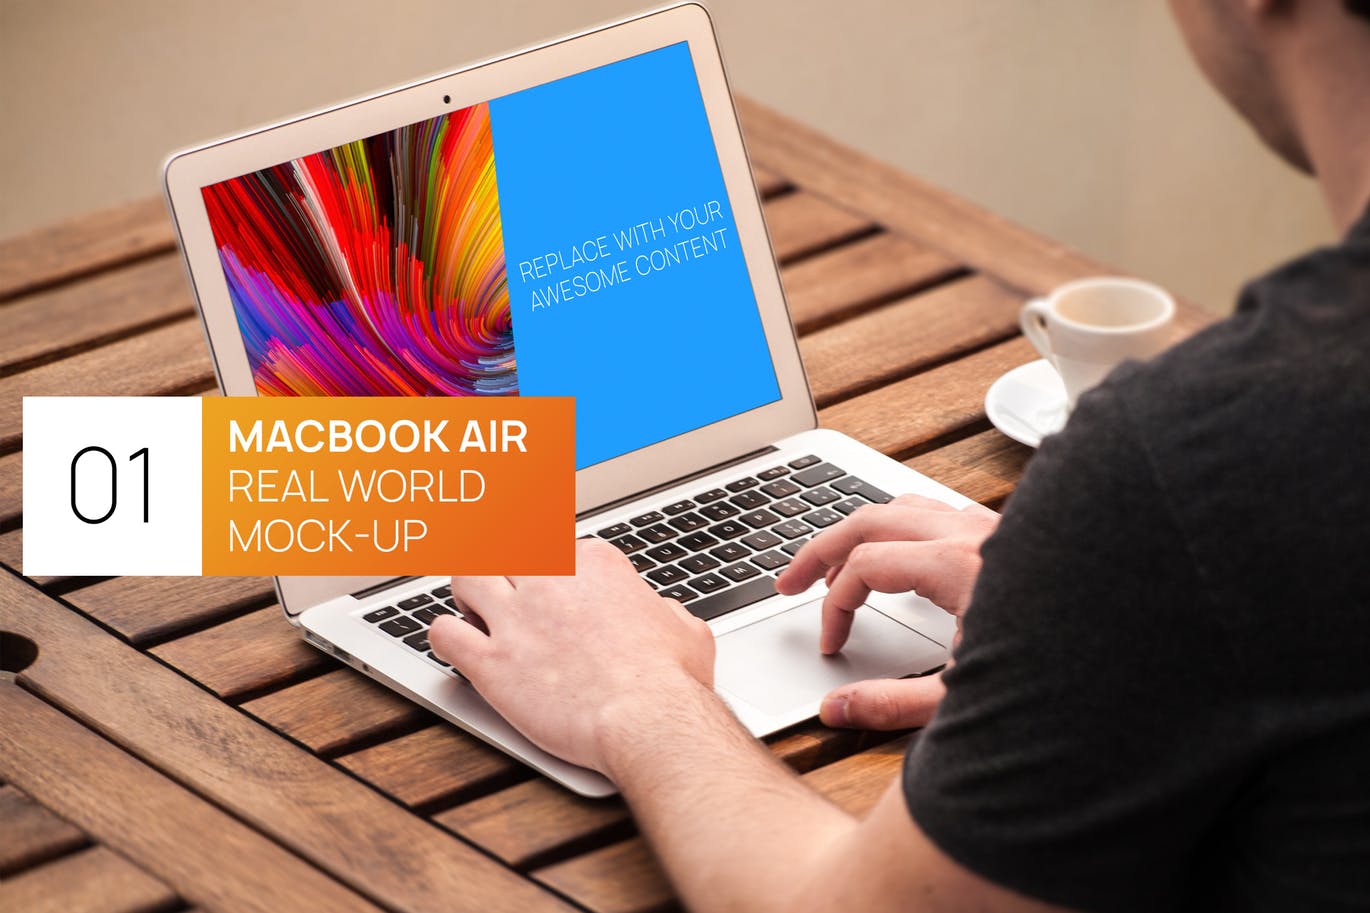 Macbook Air实景使用场景普贤居精选样机模板v1 Person Using MacBook Air Real World Photo Mock-up插图